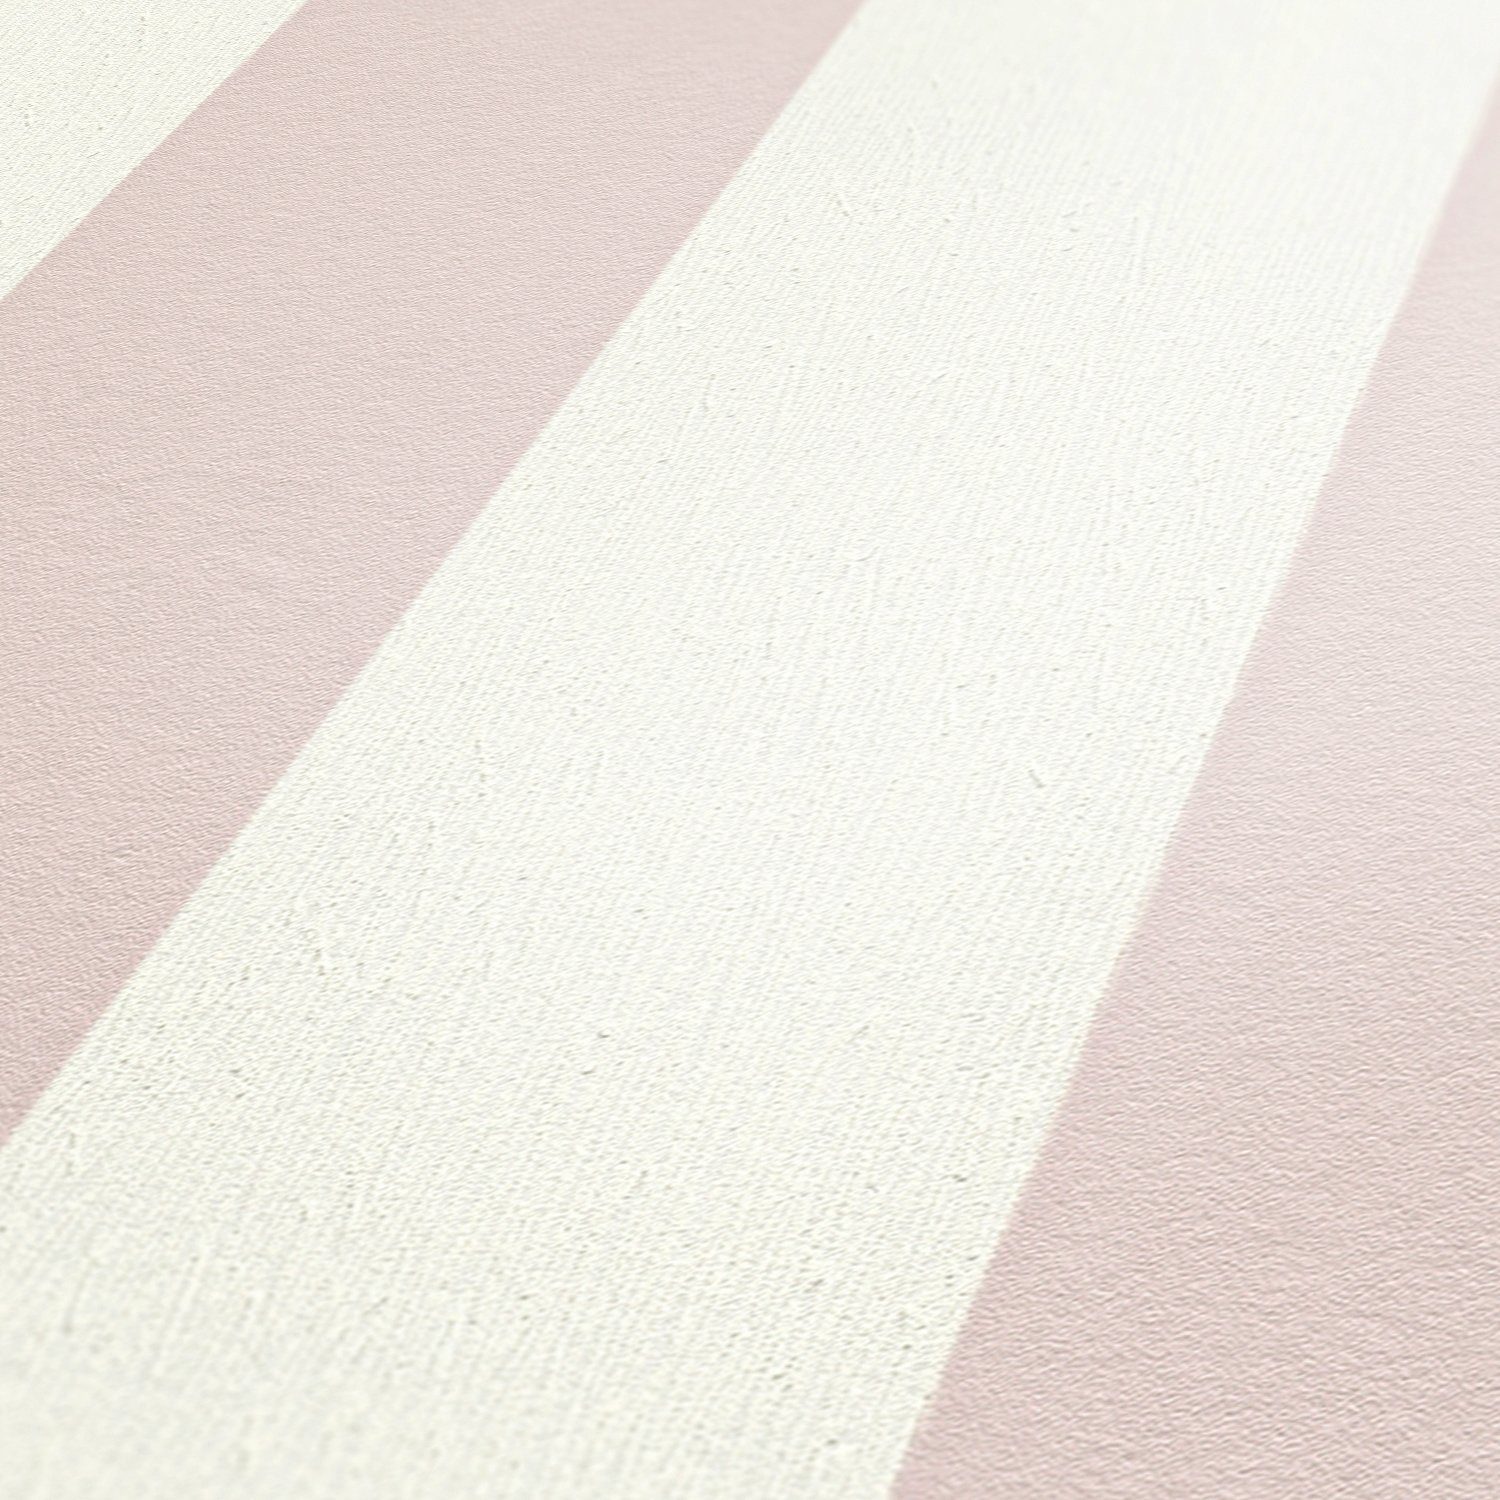 Vliestapete Création Streifen Tapete rosa/weiß gestreift, A.S. Trendwall, Streifen,